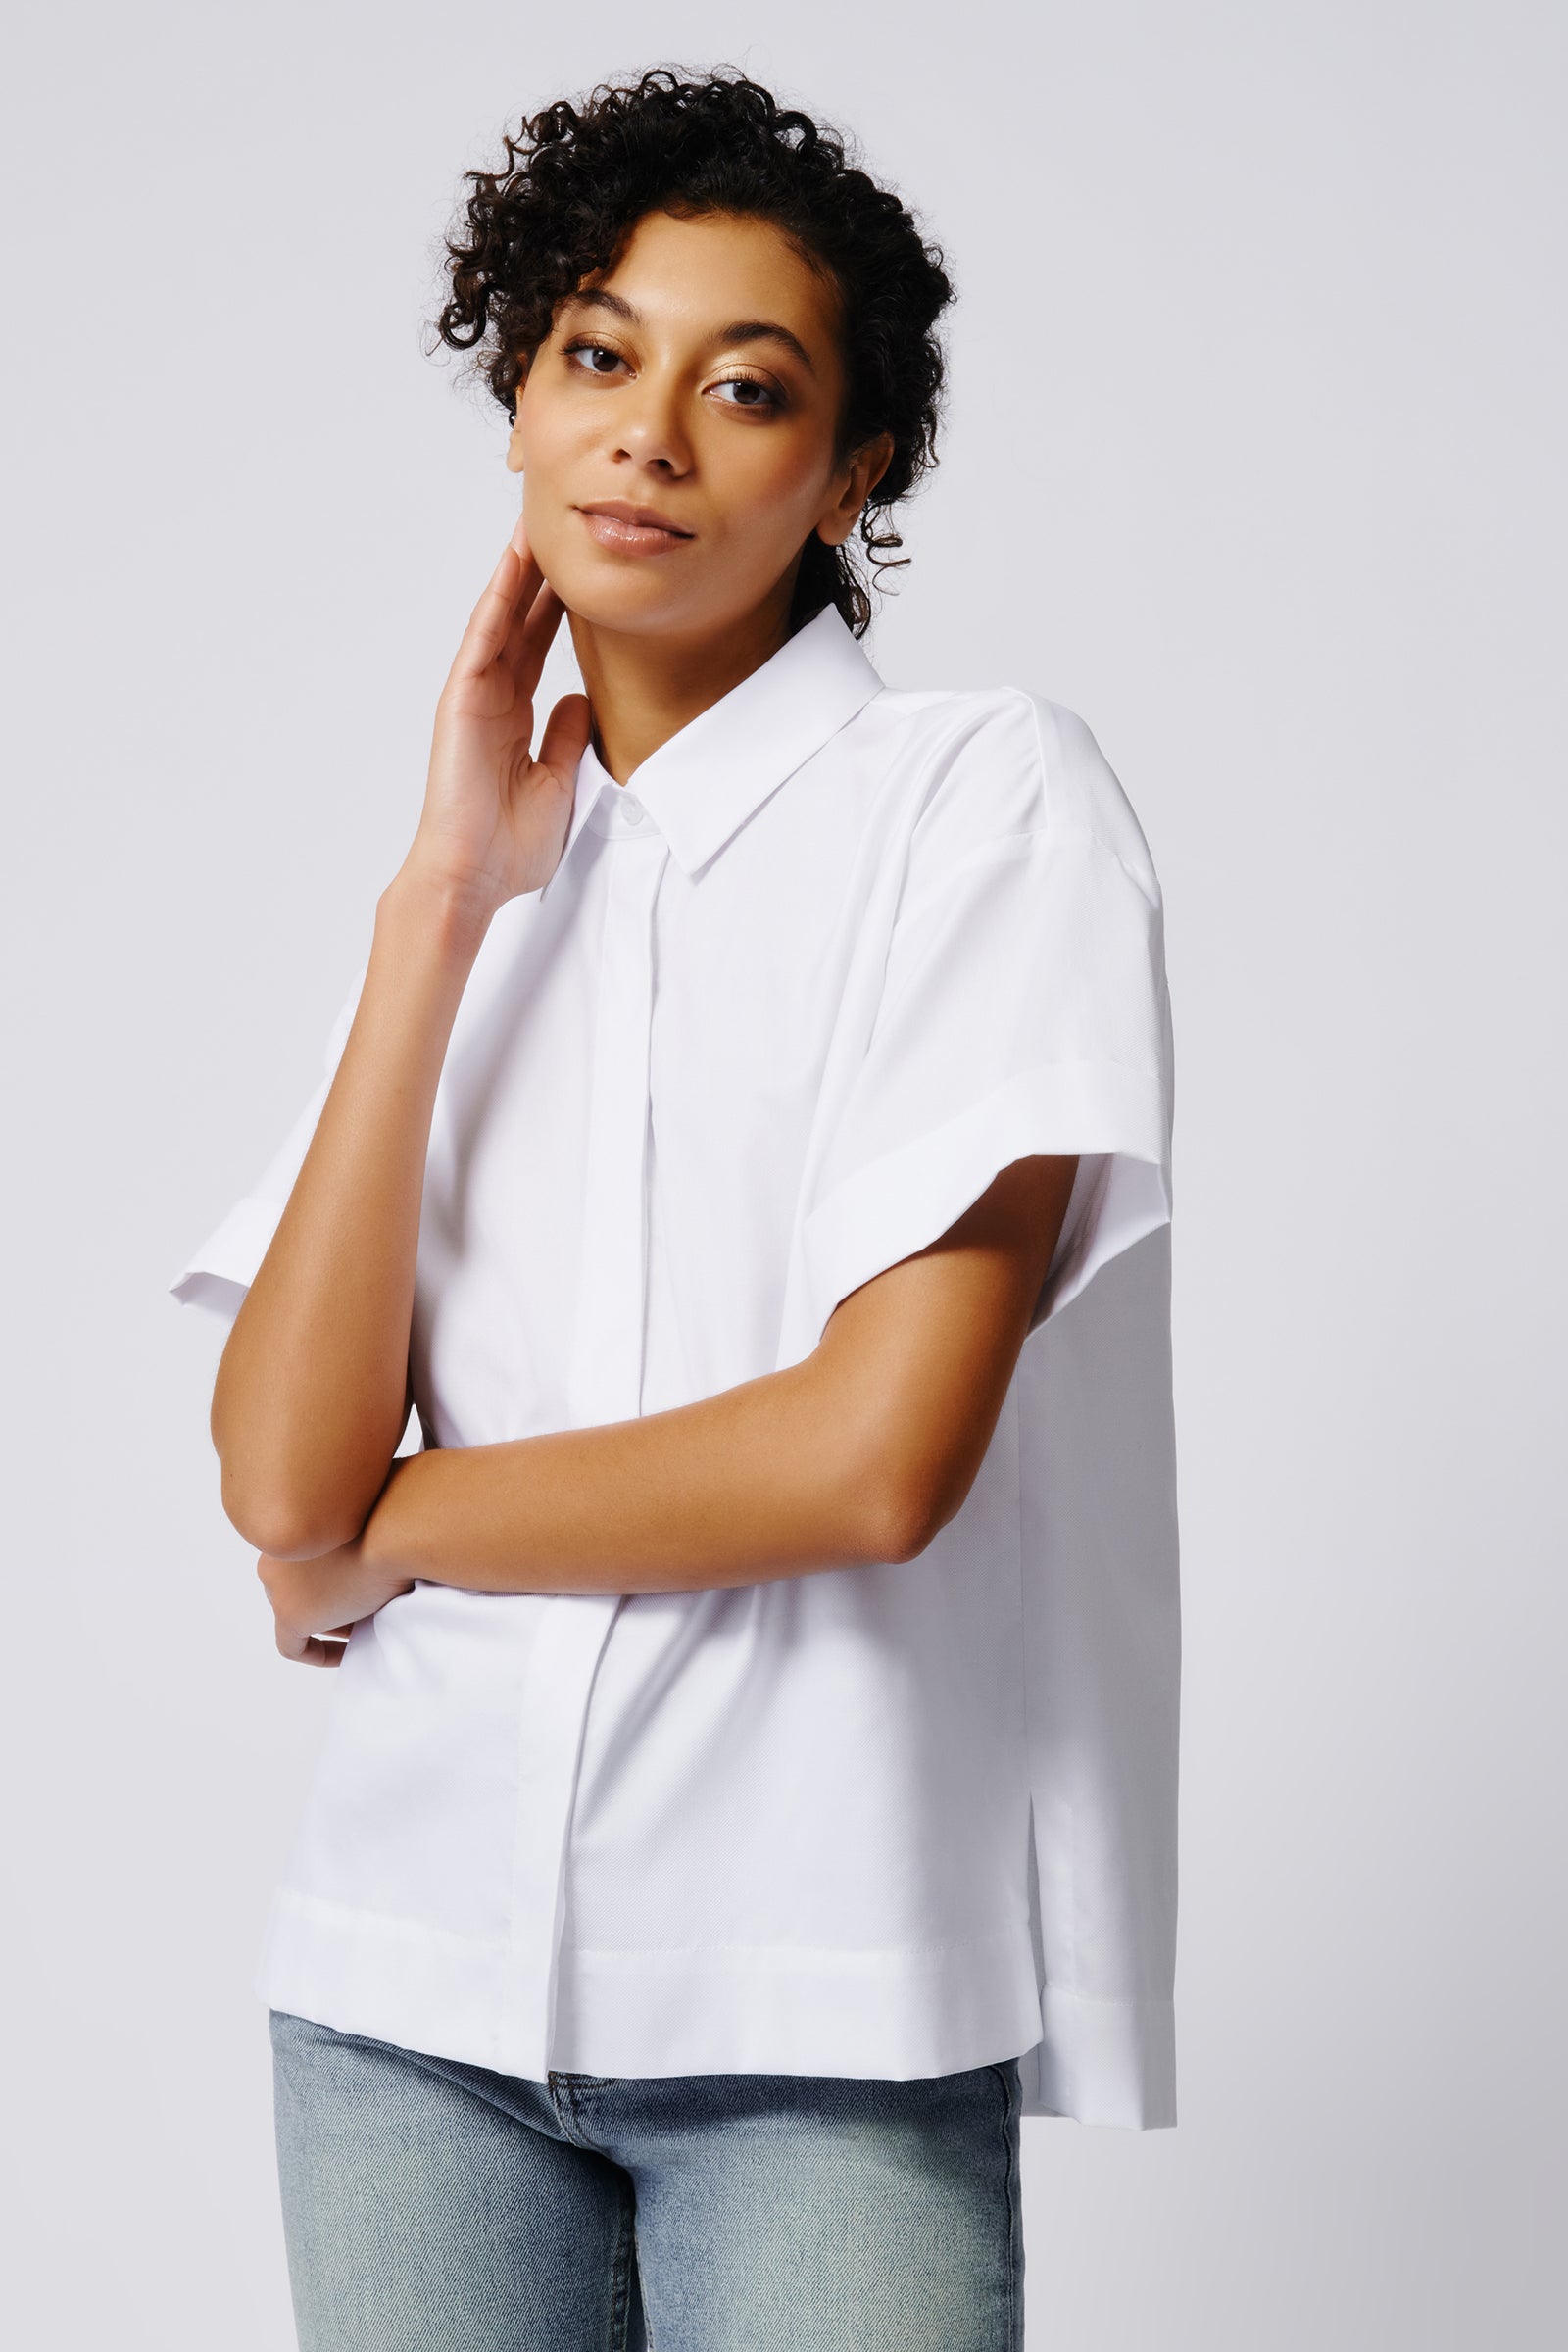 Kal Rieman Billie Cuffed Short Sleeve Shirt in White on Model Front View Crop 3